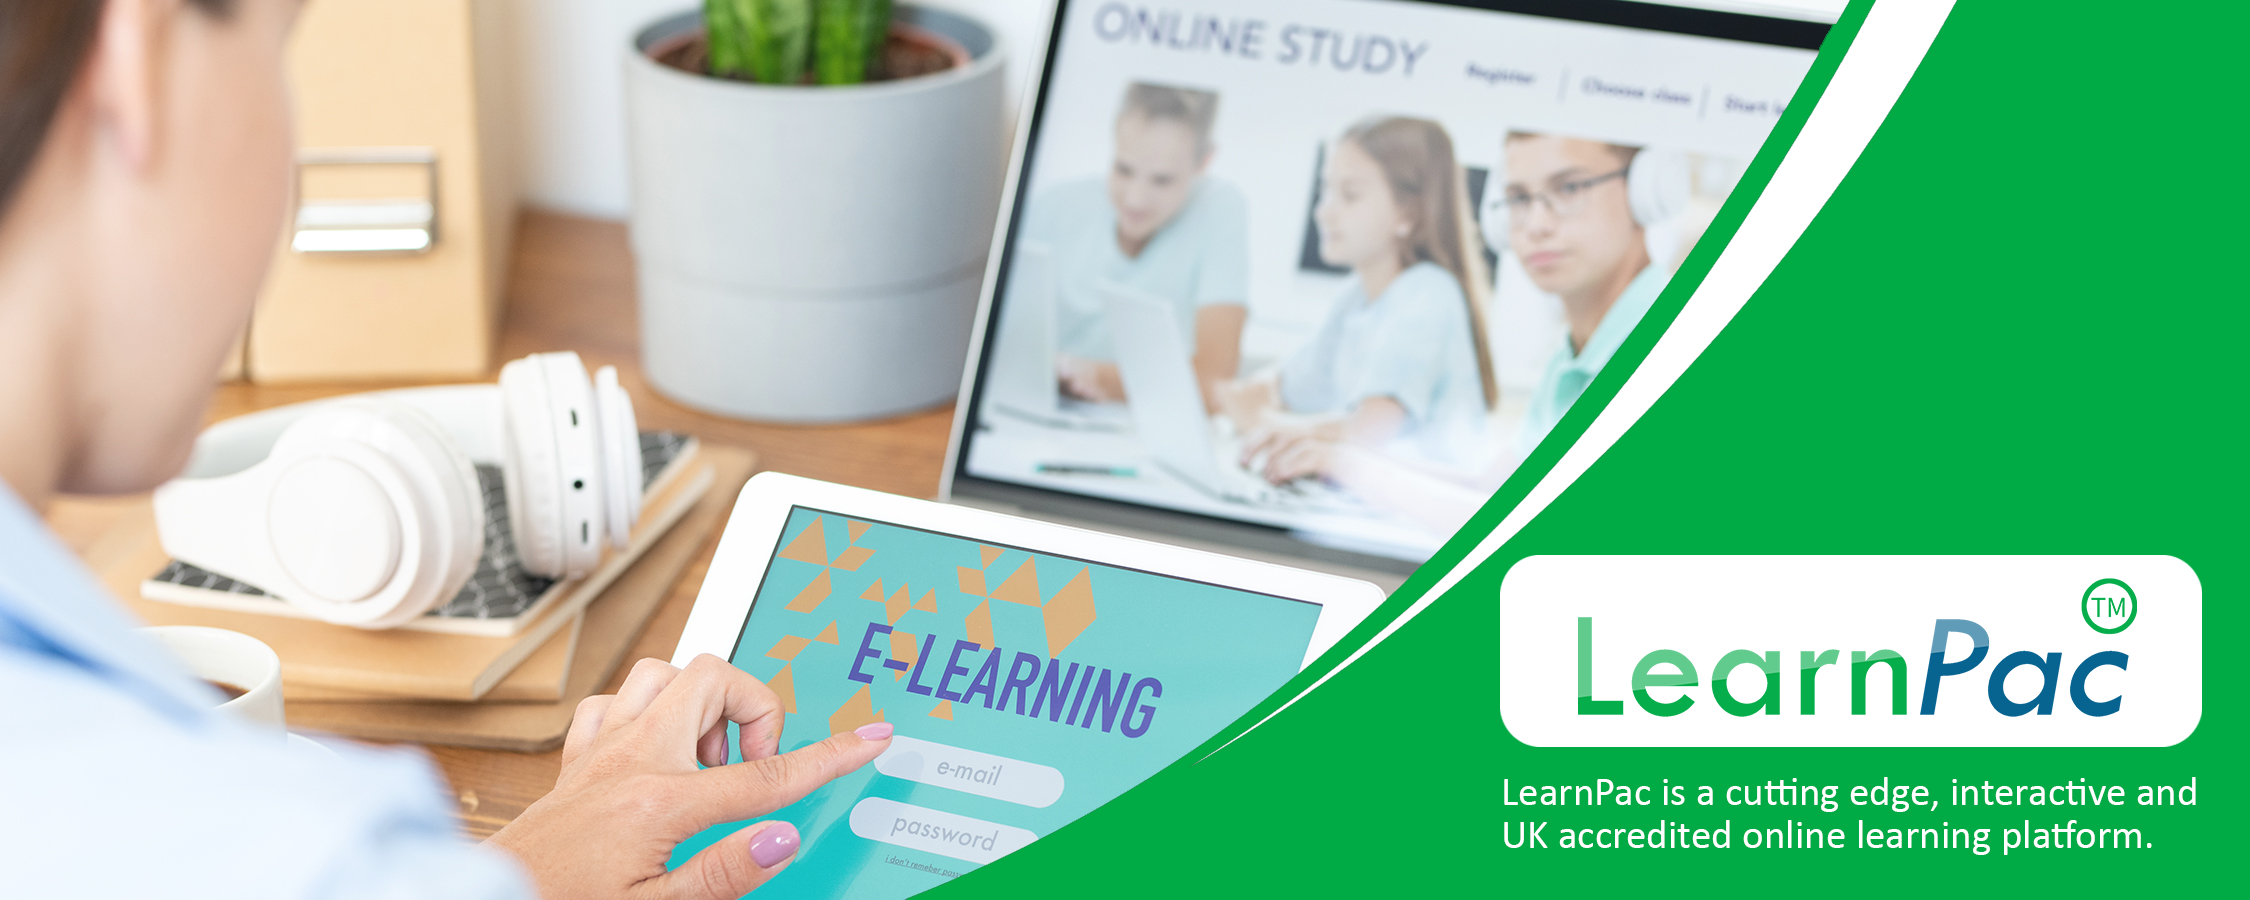 Social Learning Training - Online Learning Courses - E-Learning Courses - LearnPac Systems UK -